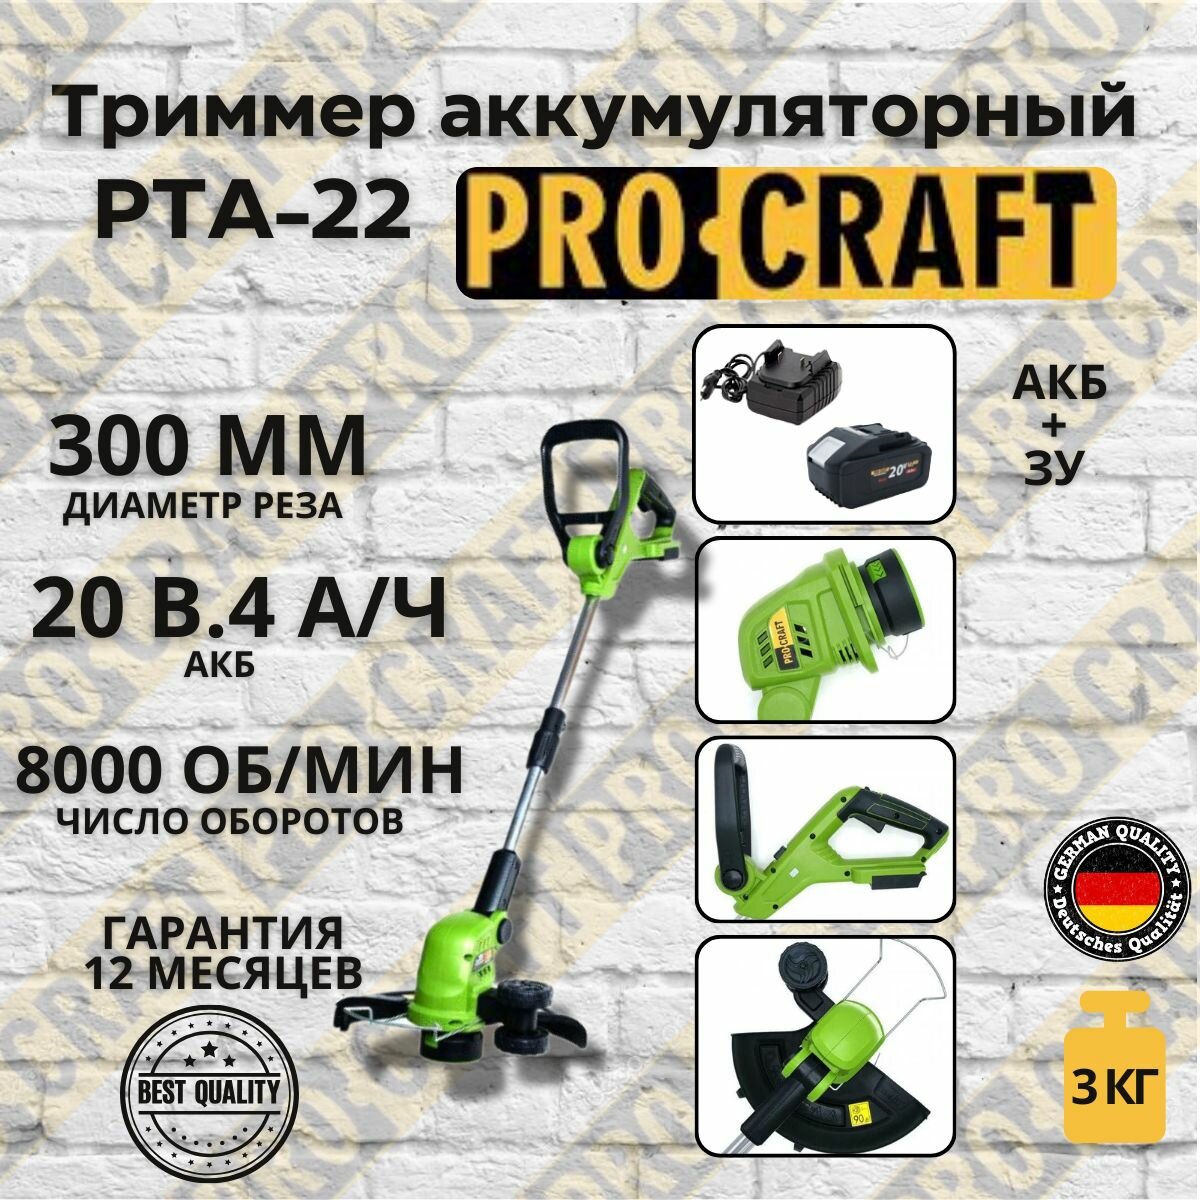 Триммер аккумуляторный коса Procraft PTA-22 (1 АКБ + ЗУ) 8000об/мин